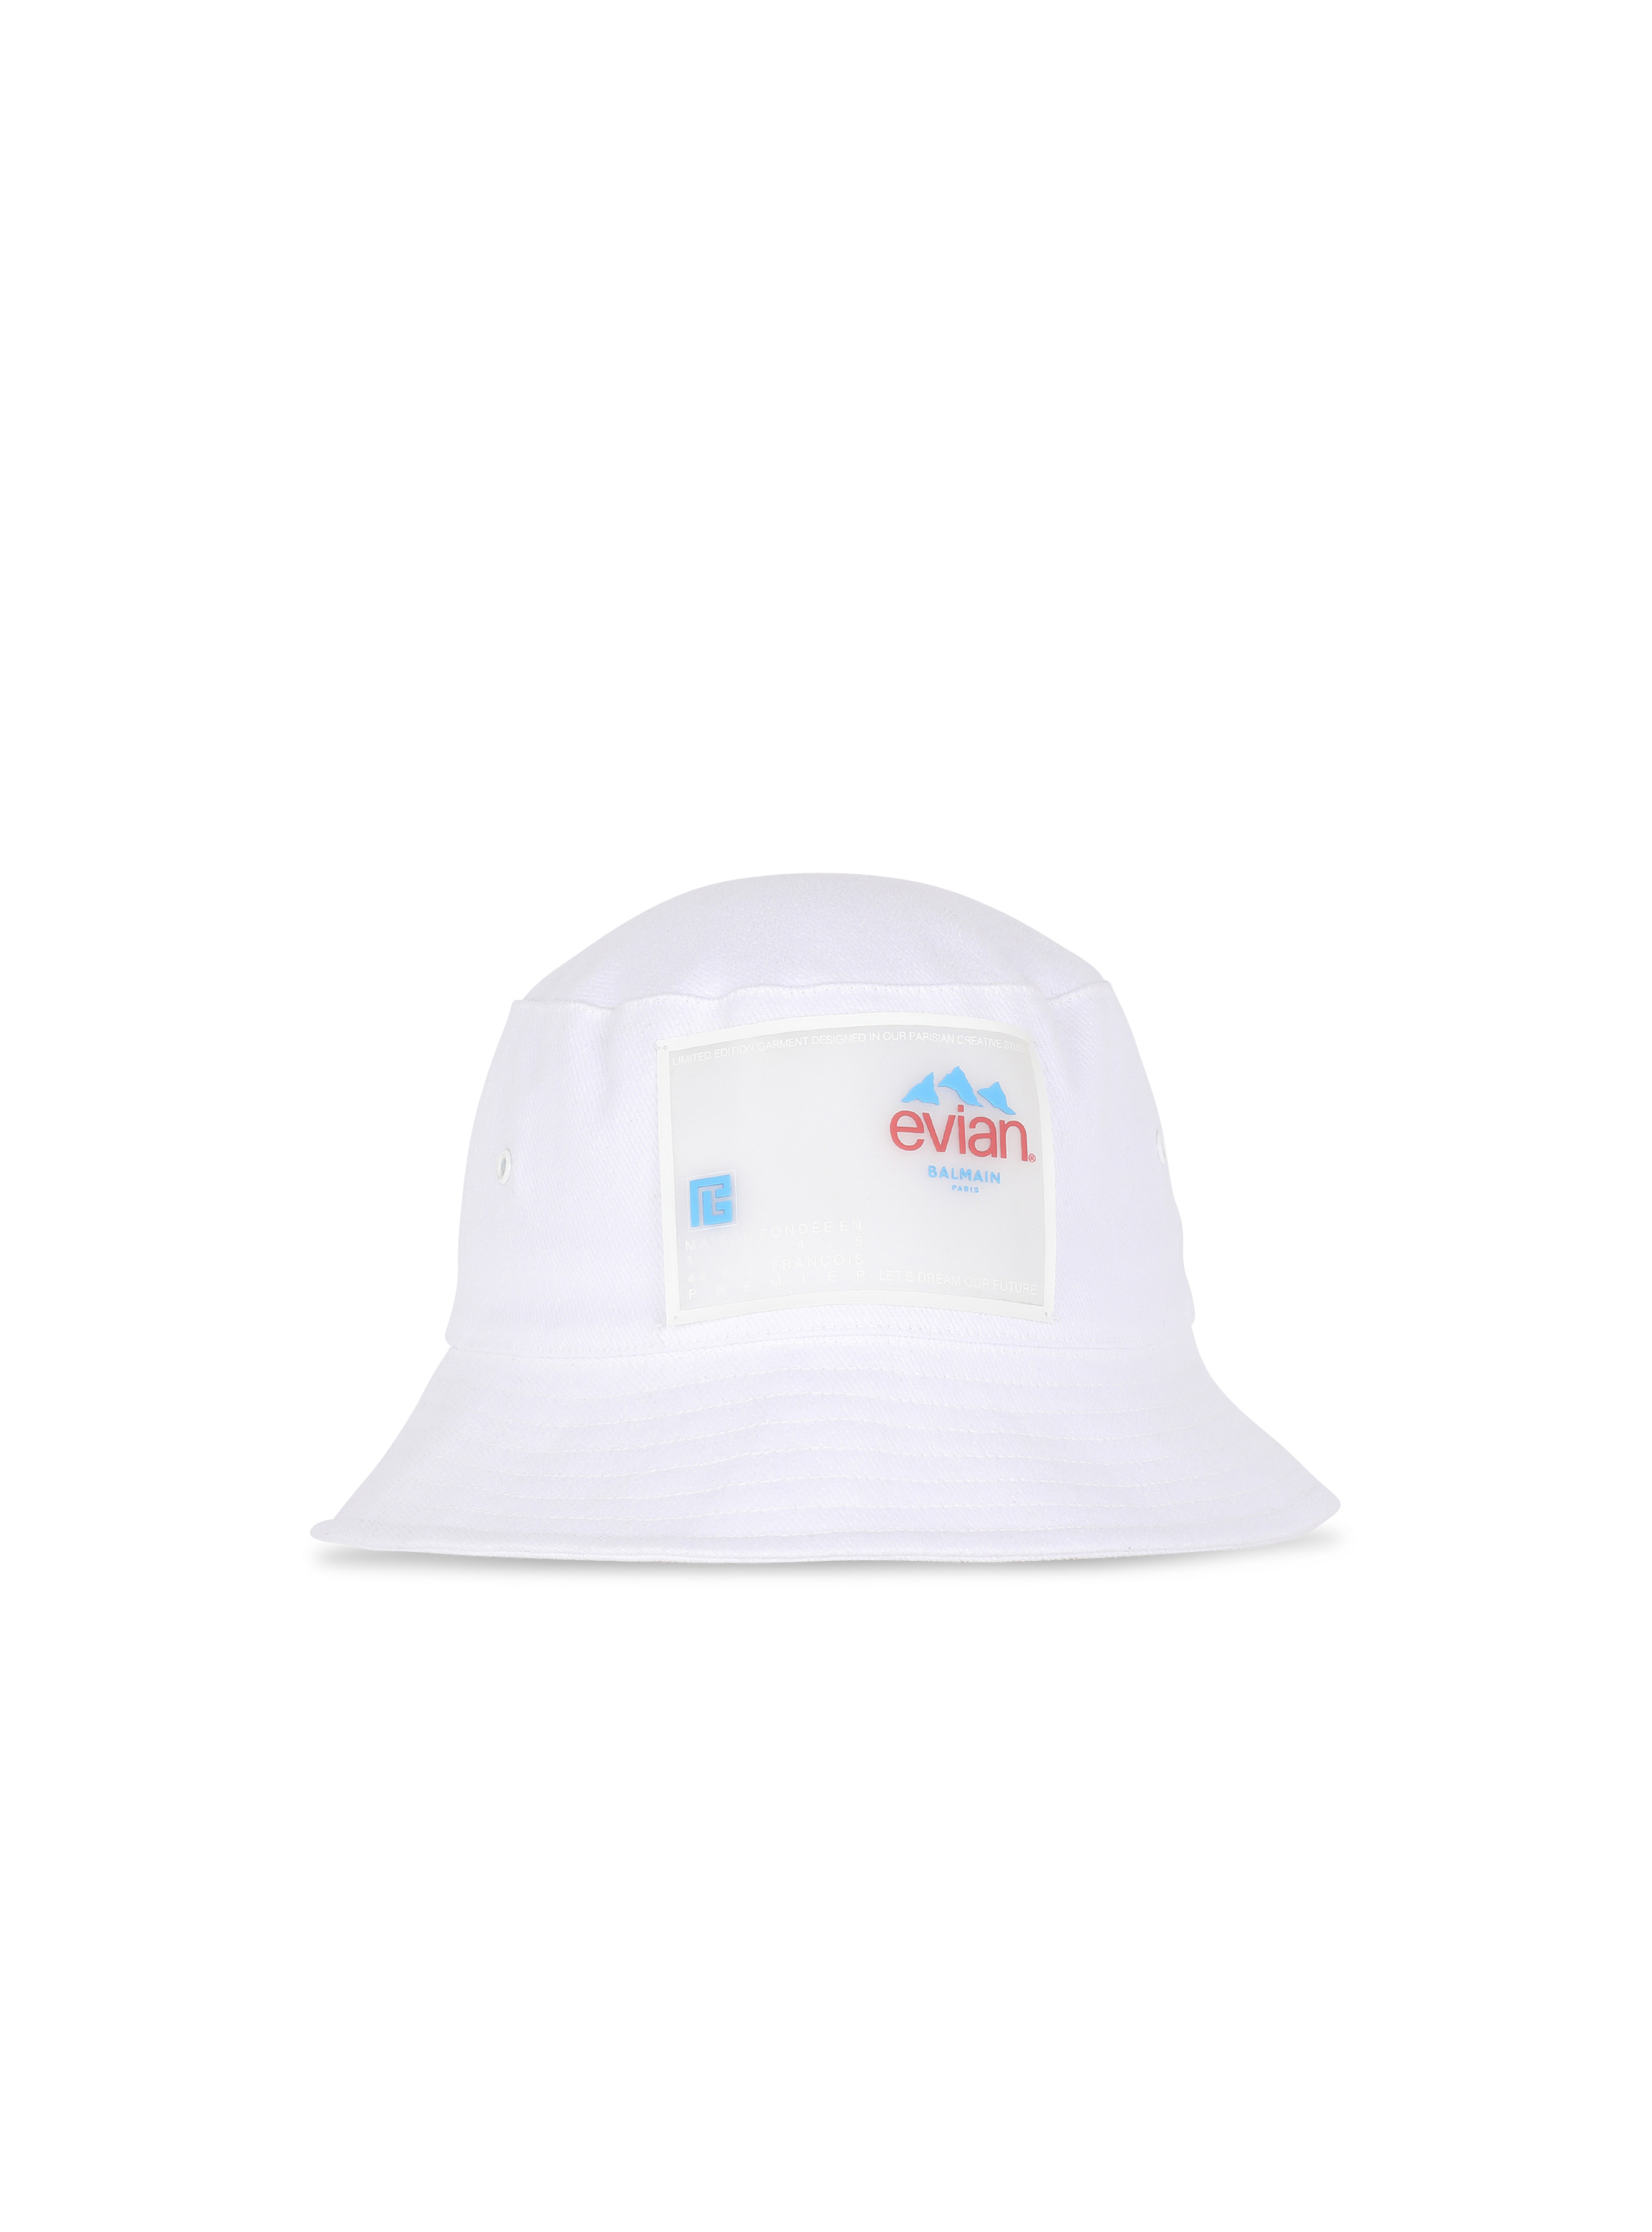 Balmain x Evian - Bucket hat - 1